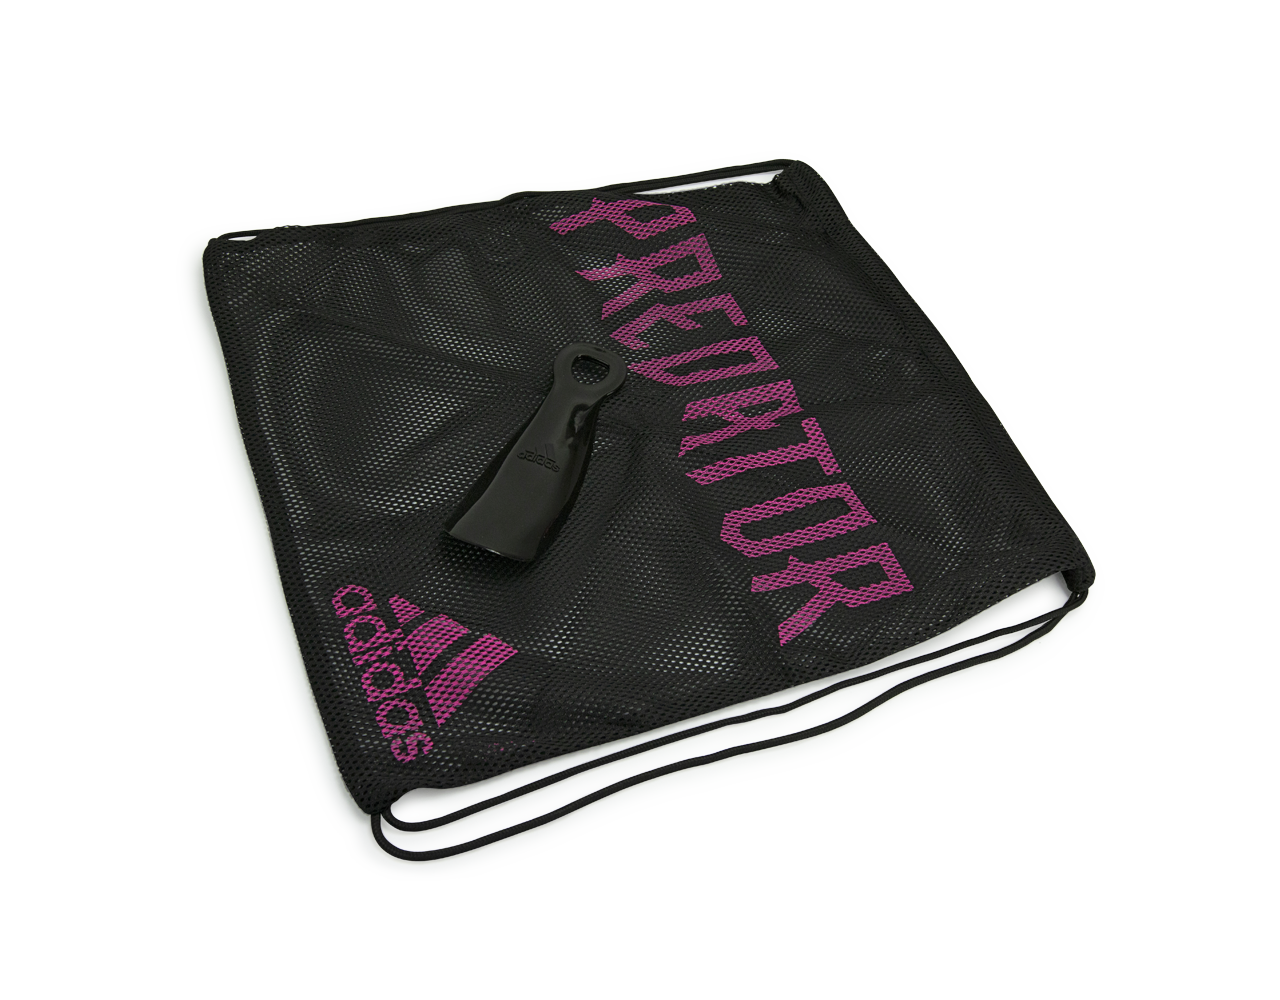 Adidas Predator Mutator 20+ FG - Core Black / Pink - Football Shirt Culture  - Latest Football Kit News and More